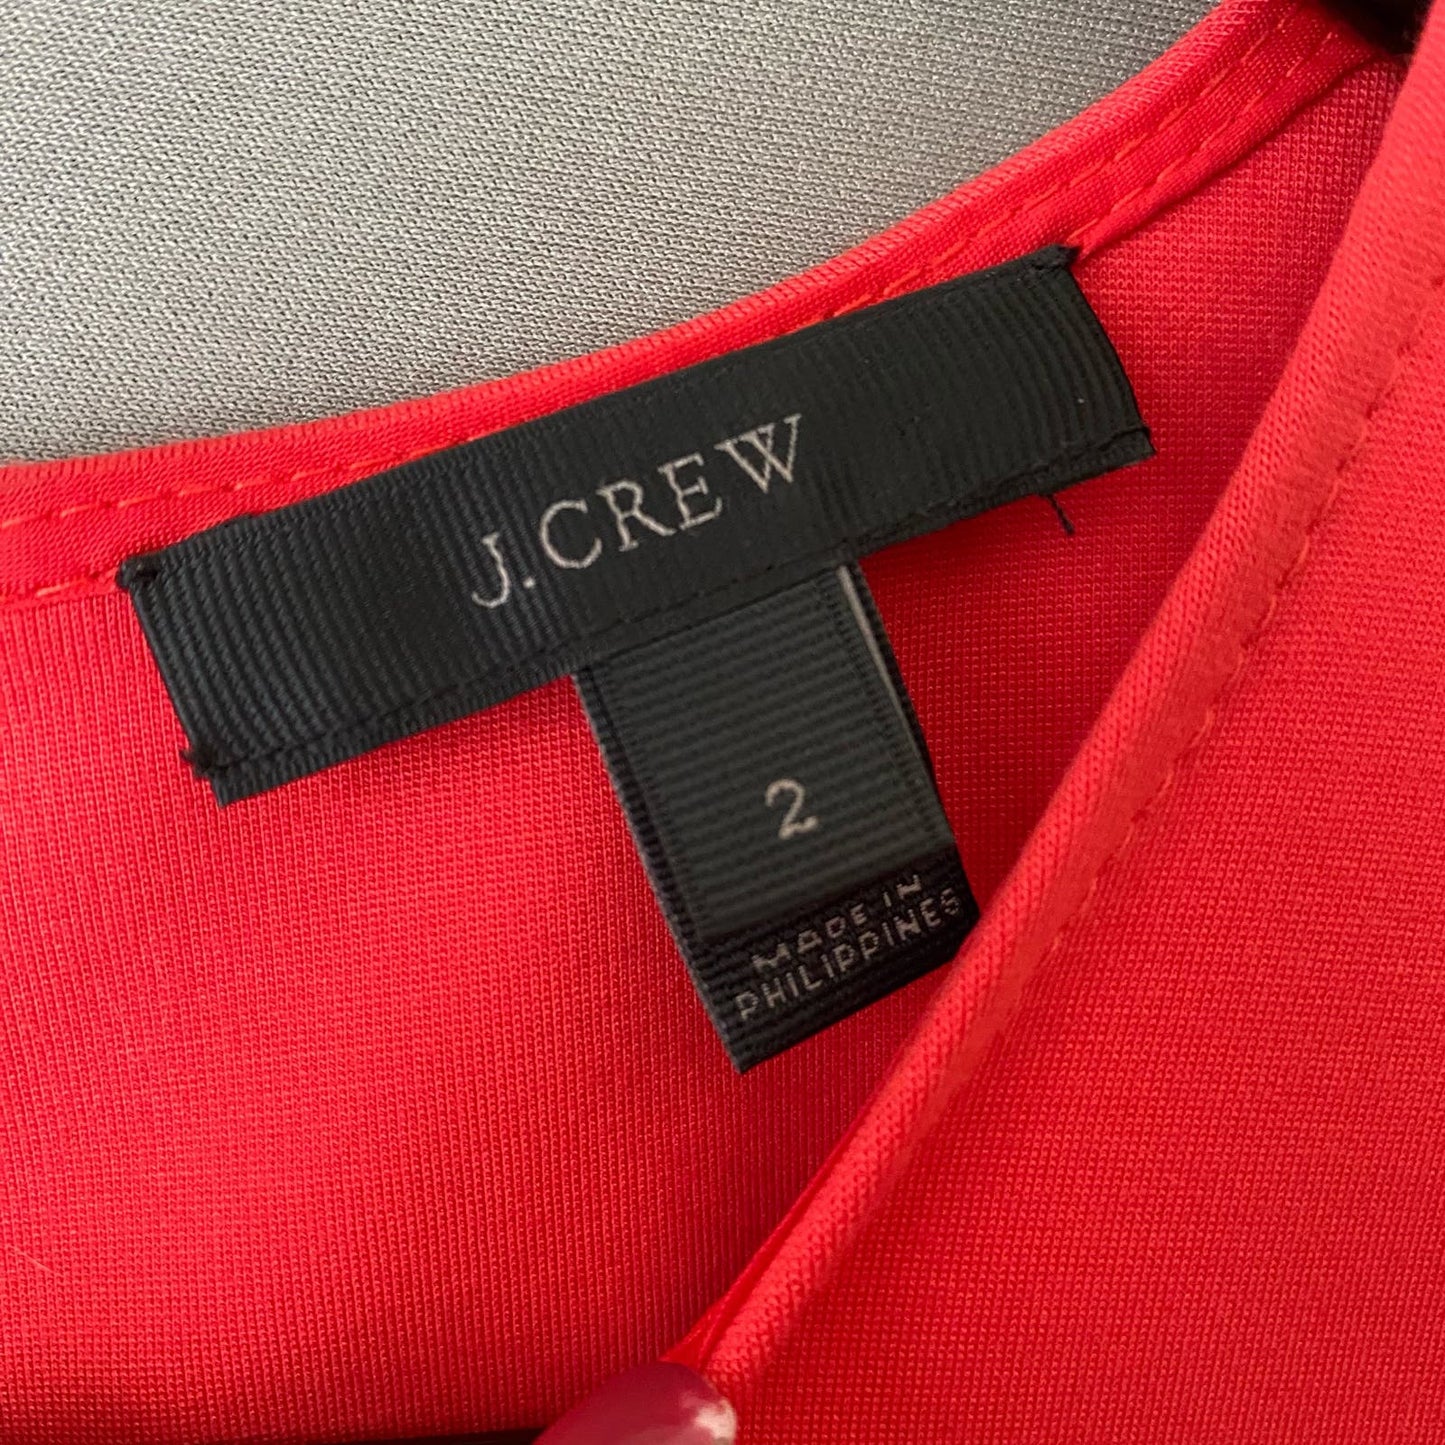 J.Crew sz 2 cap sleeve coral sheath mini dress